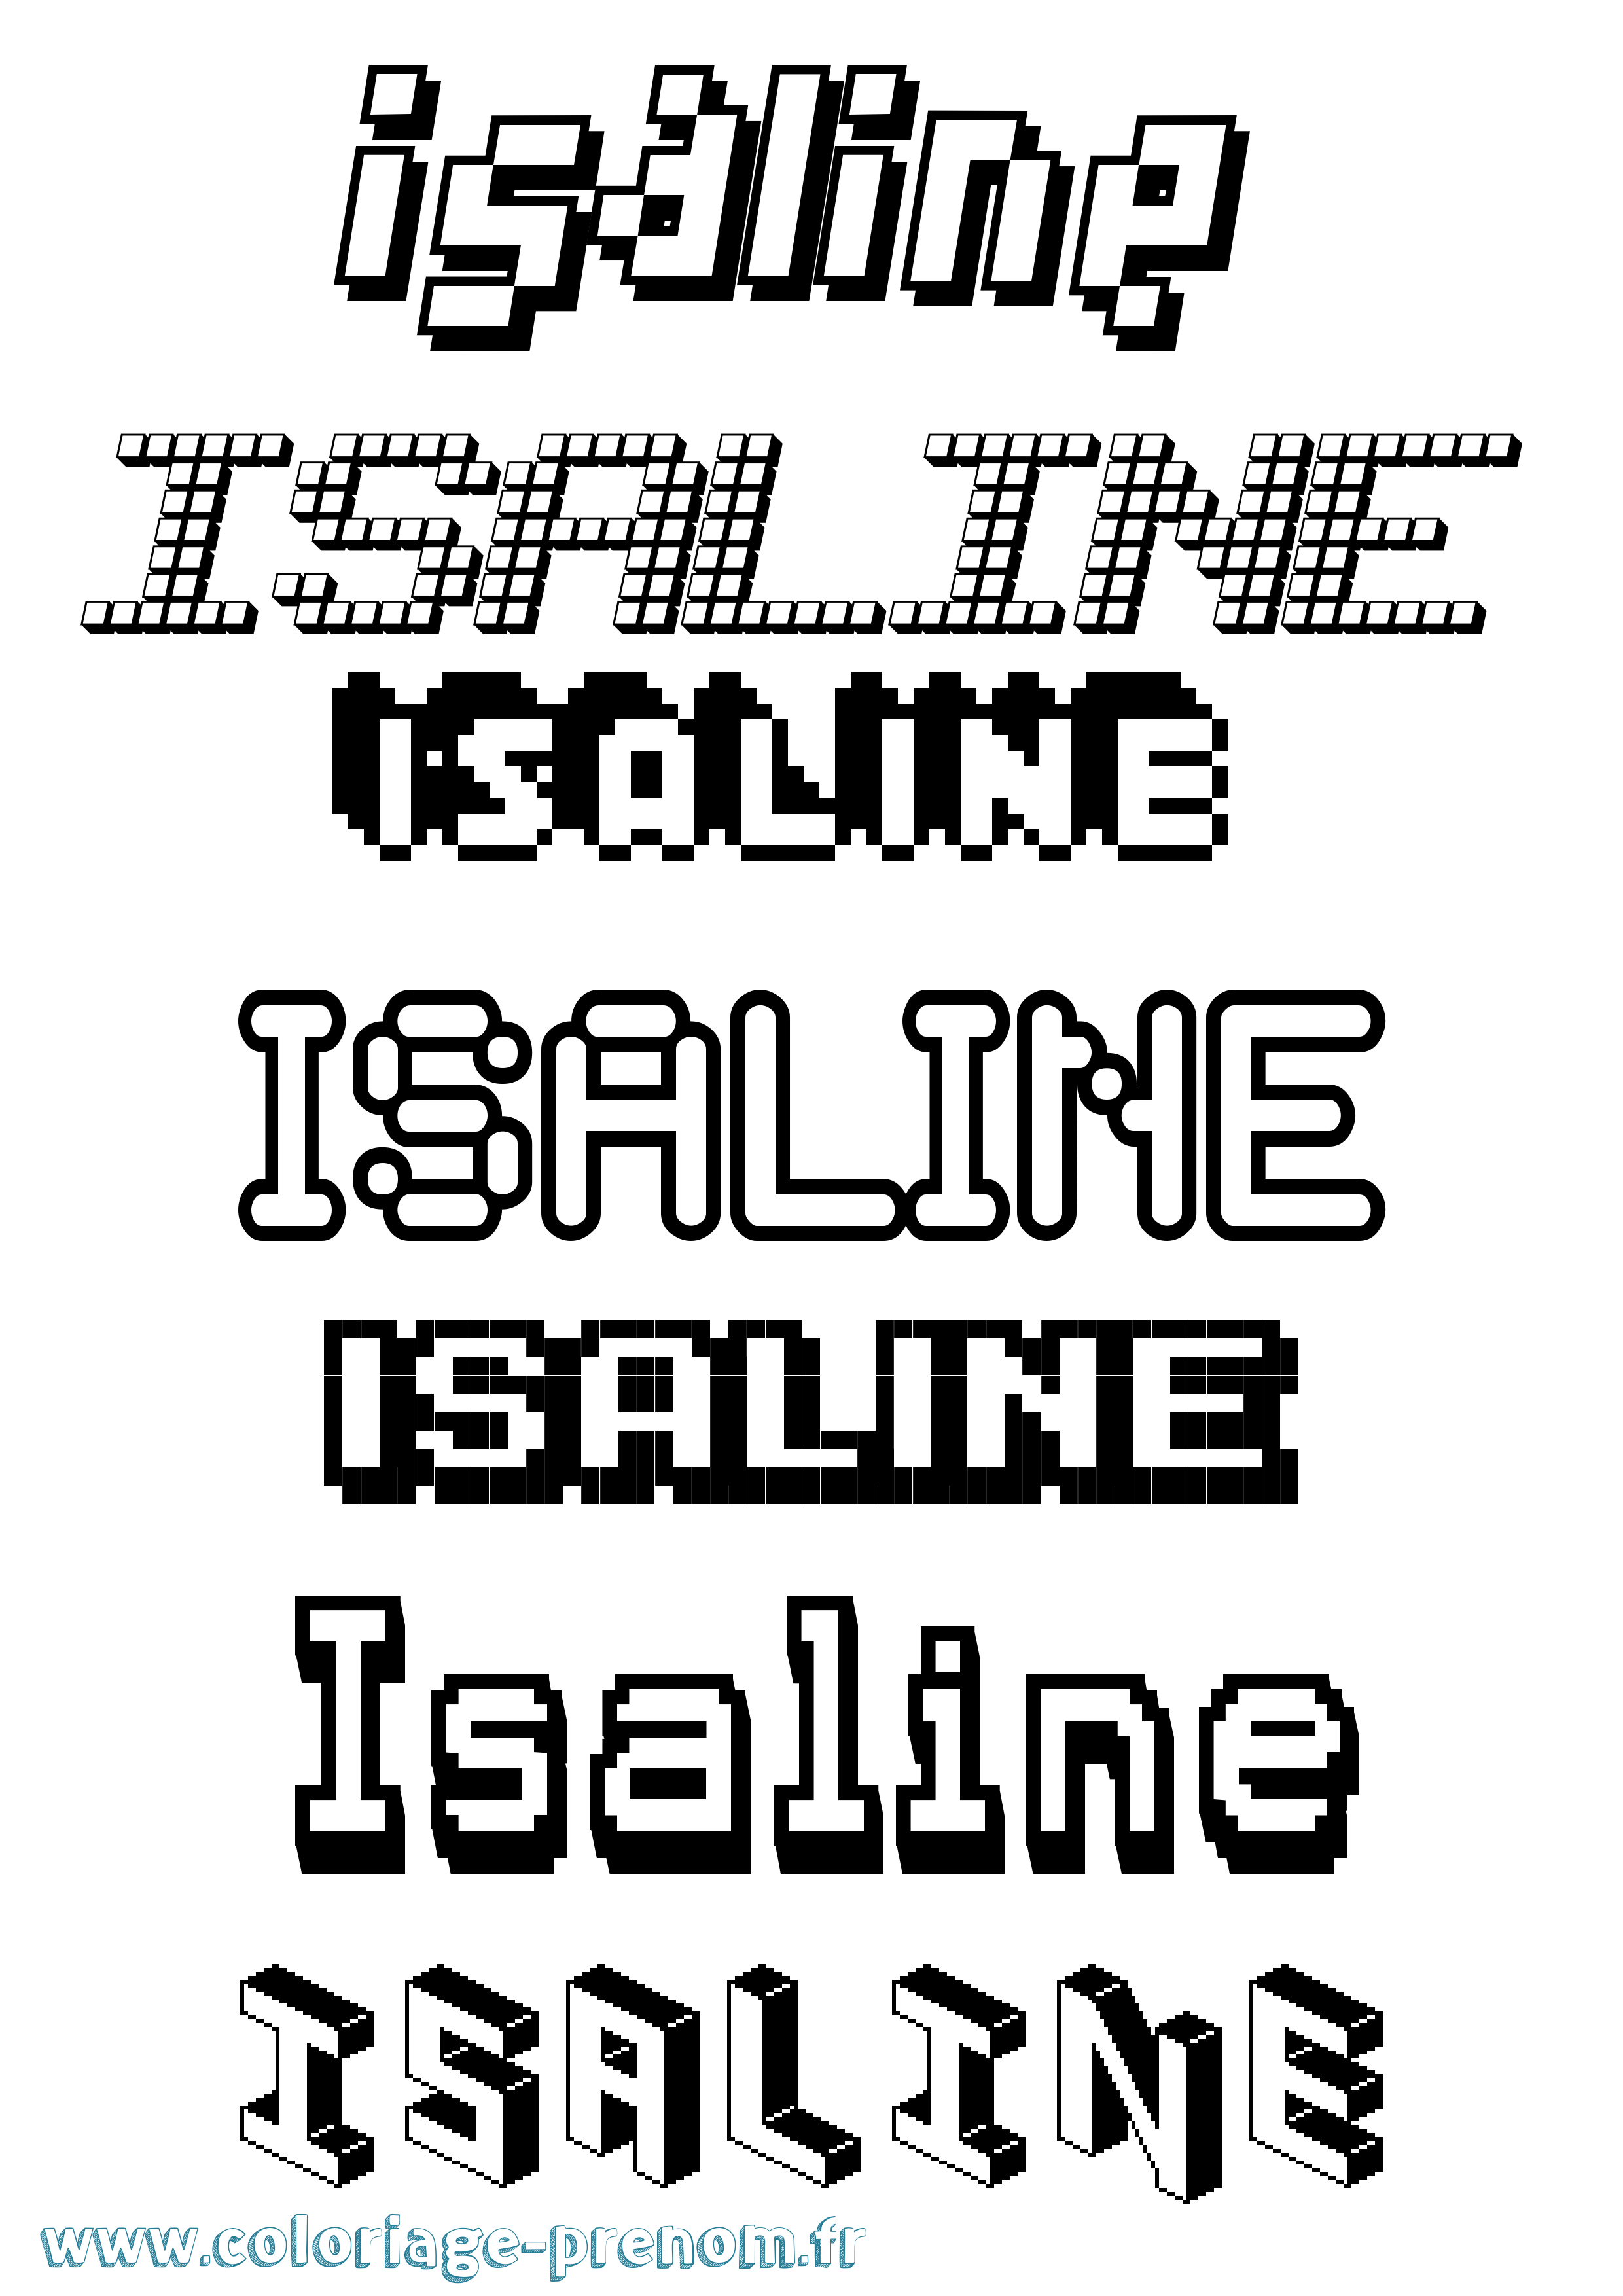 Coloriage prénom Isaline Pixel